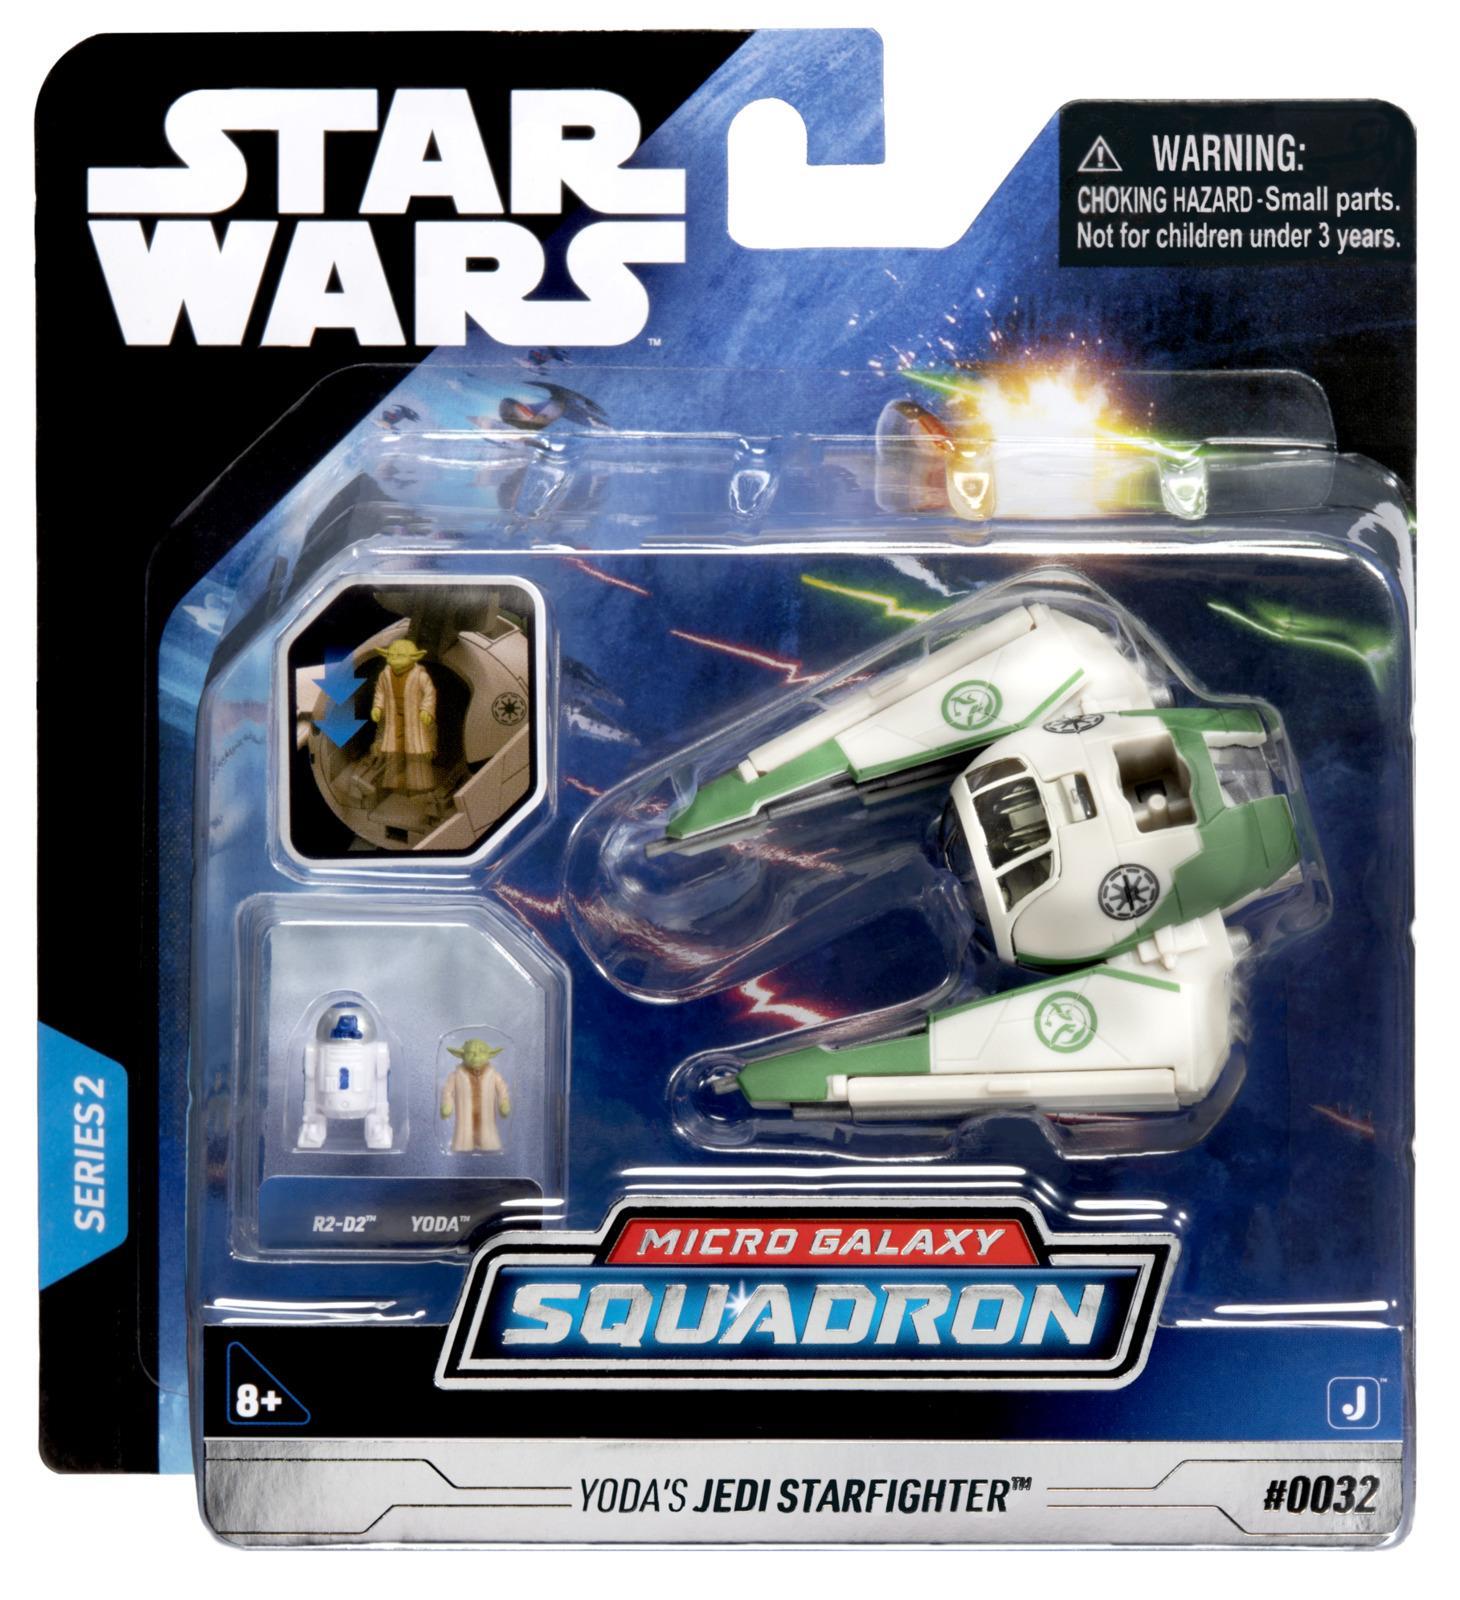 Star Wars: Micro Galaxy Squadron - Jedi Star Fighter (Yoda)